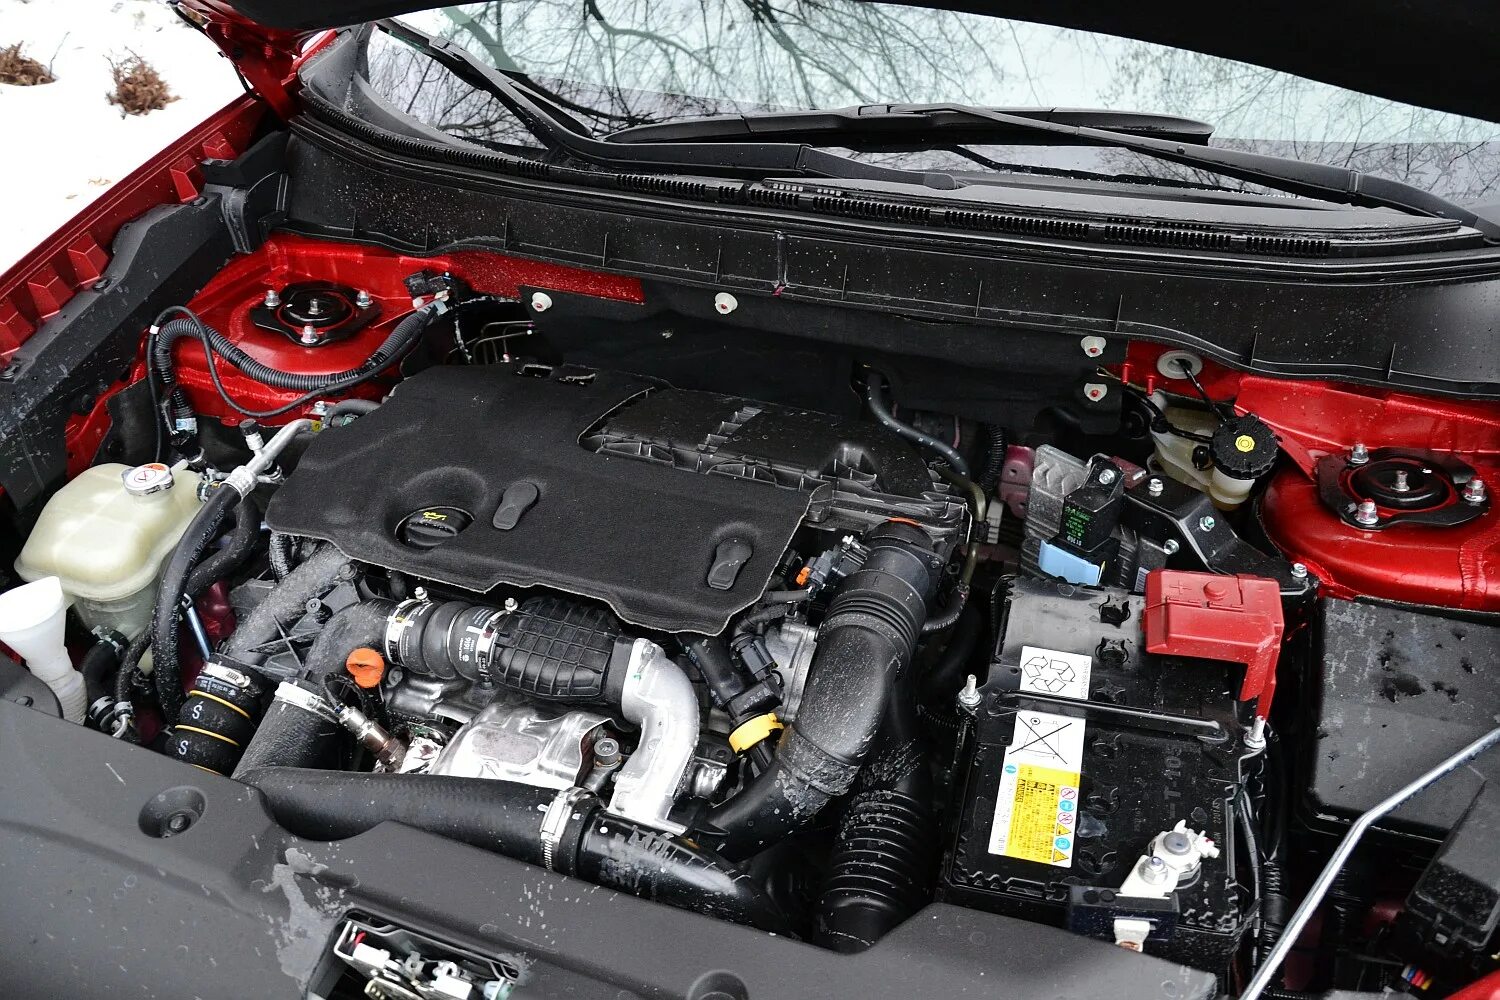 Митсубиси асх какой двигатель. Двигатель Mitsubishi ASX 1.6 2013. Под капотом Мицубиси АСХ 2013. Аккумулятор Мицубиси АСХ 1.8. Двигатель Митсубиси АСХ 2.0.